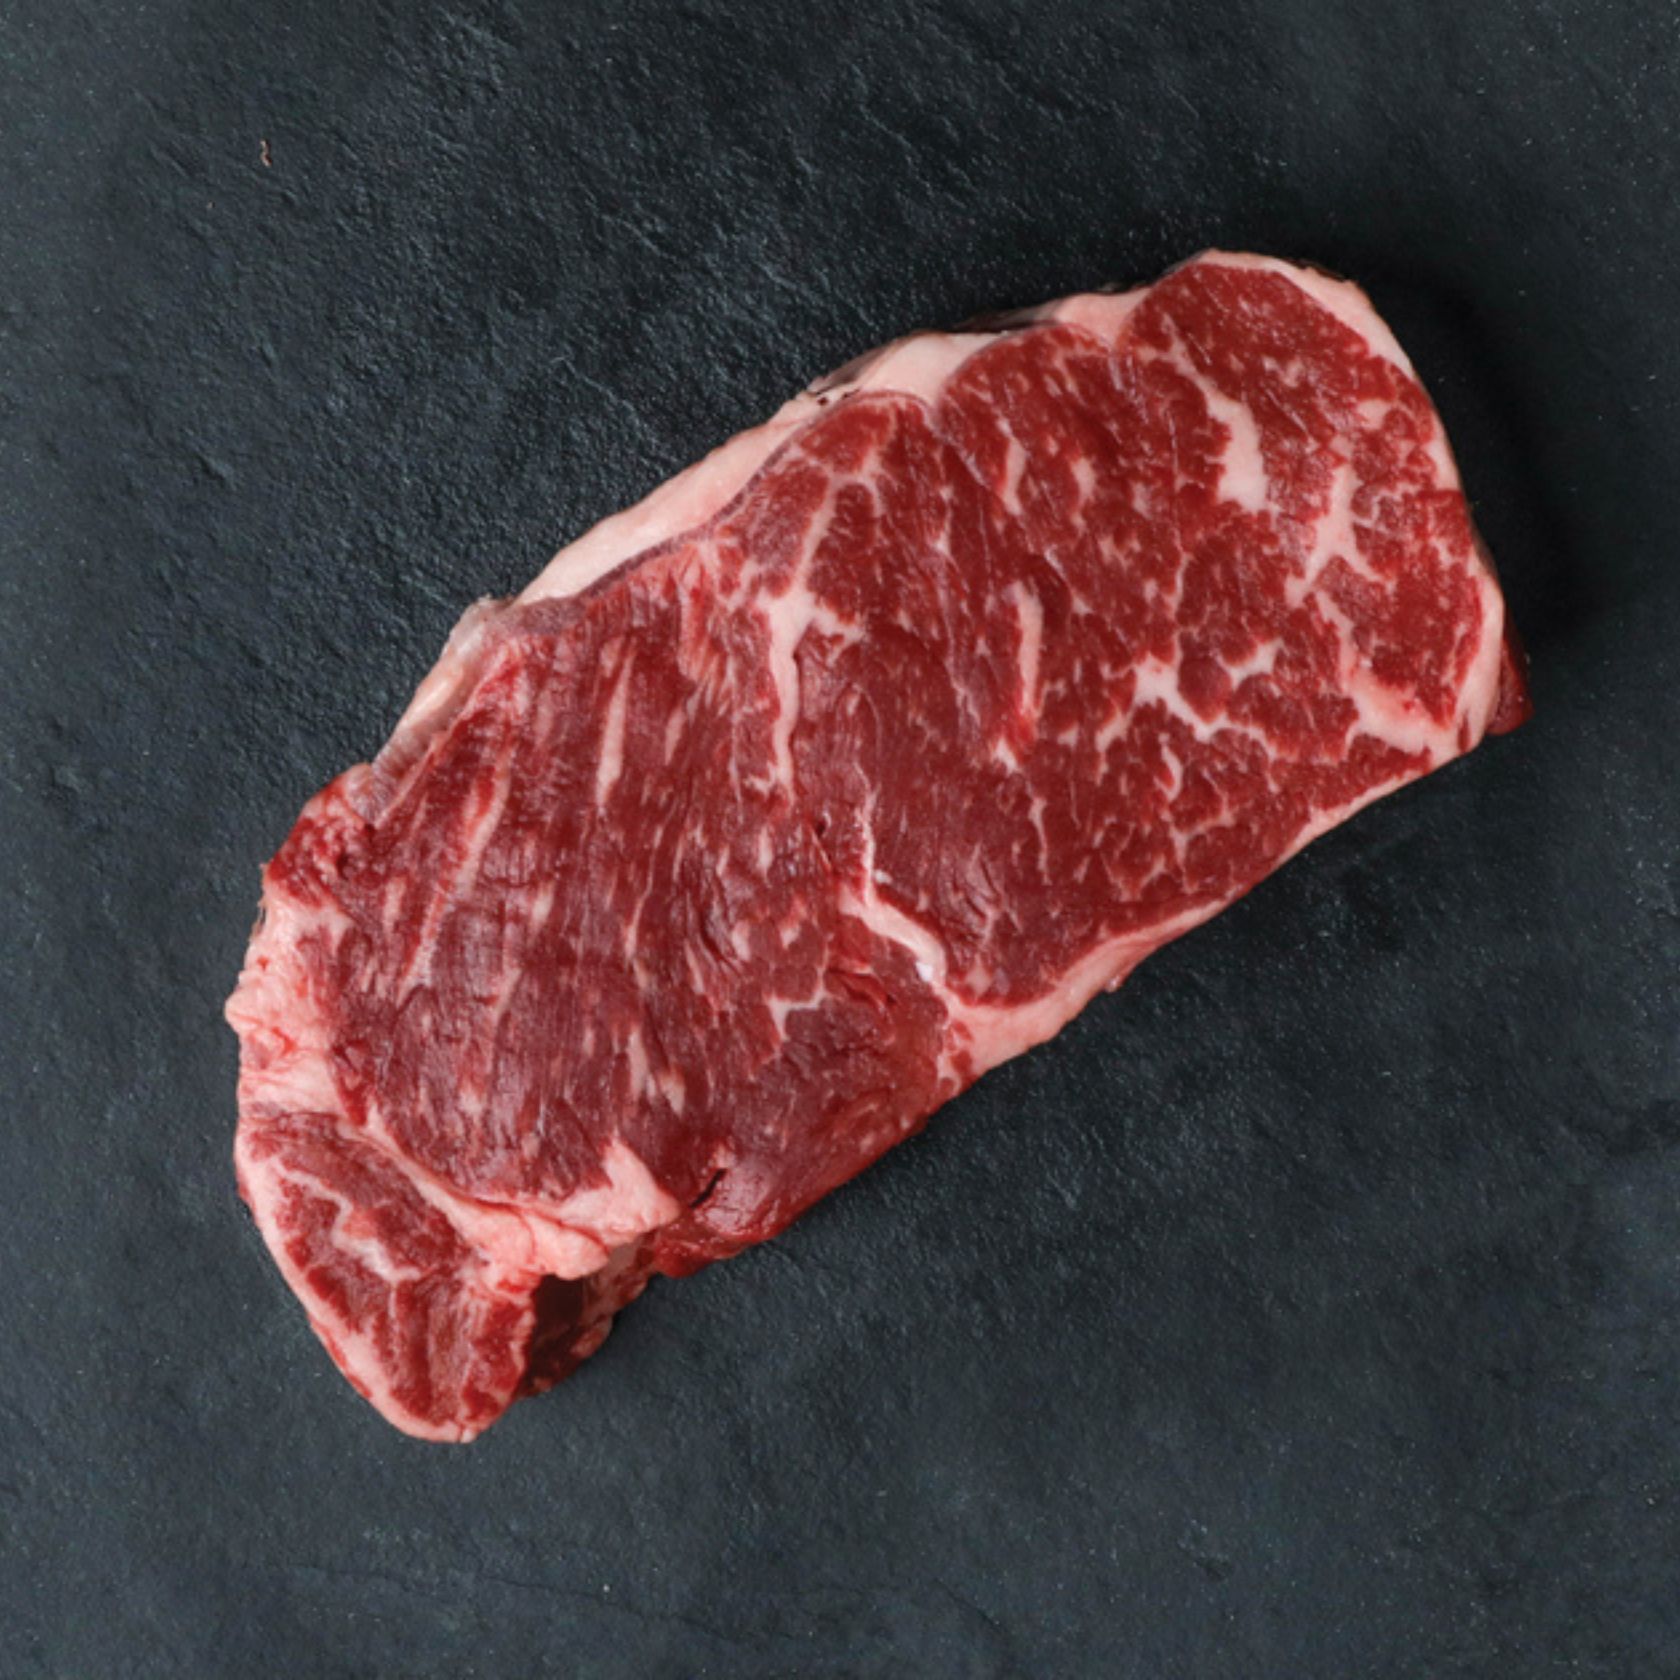 An image of a beef steak